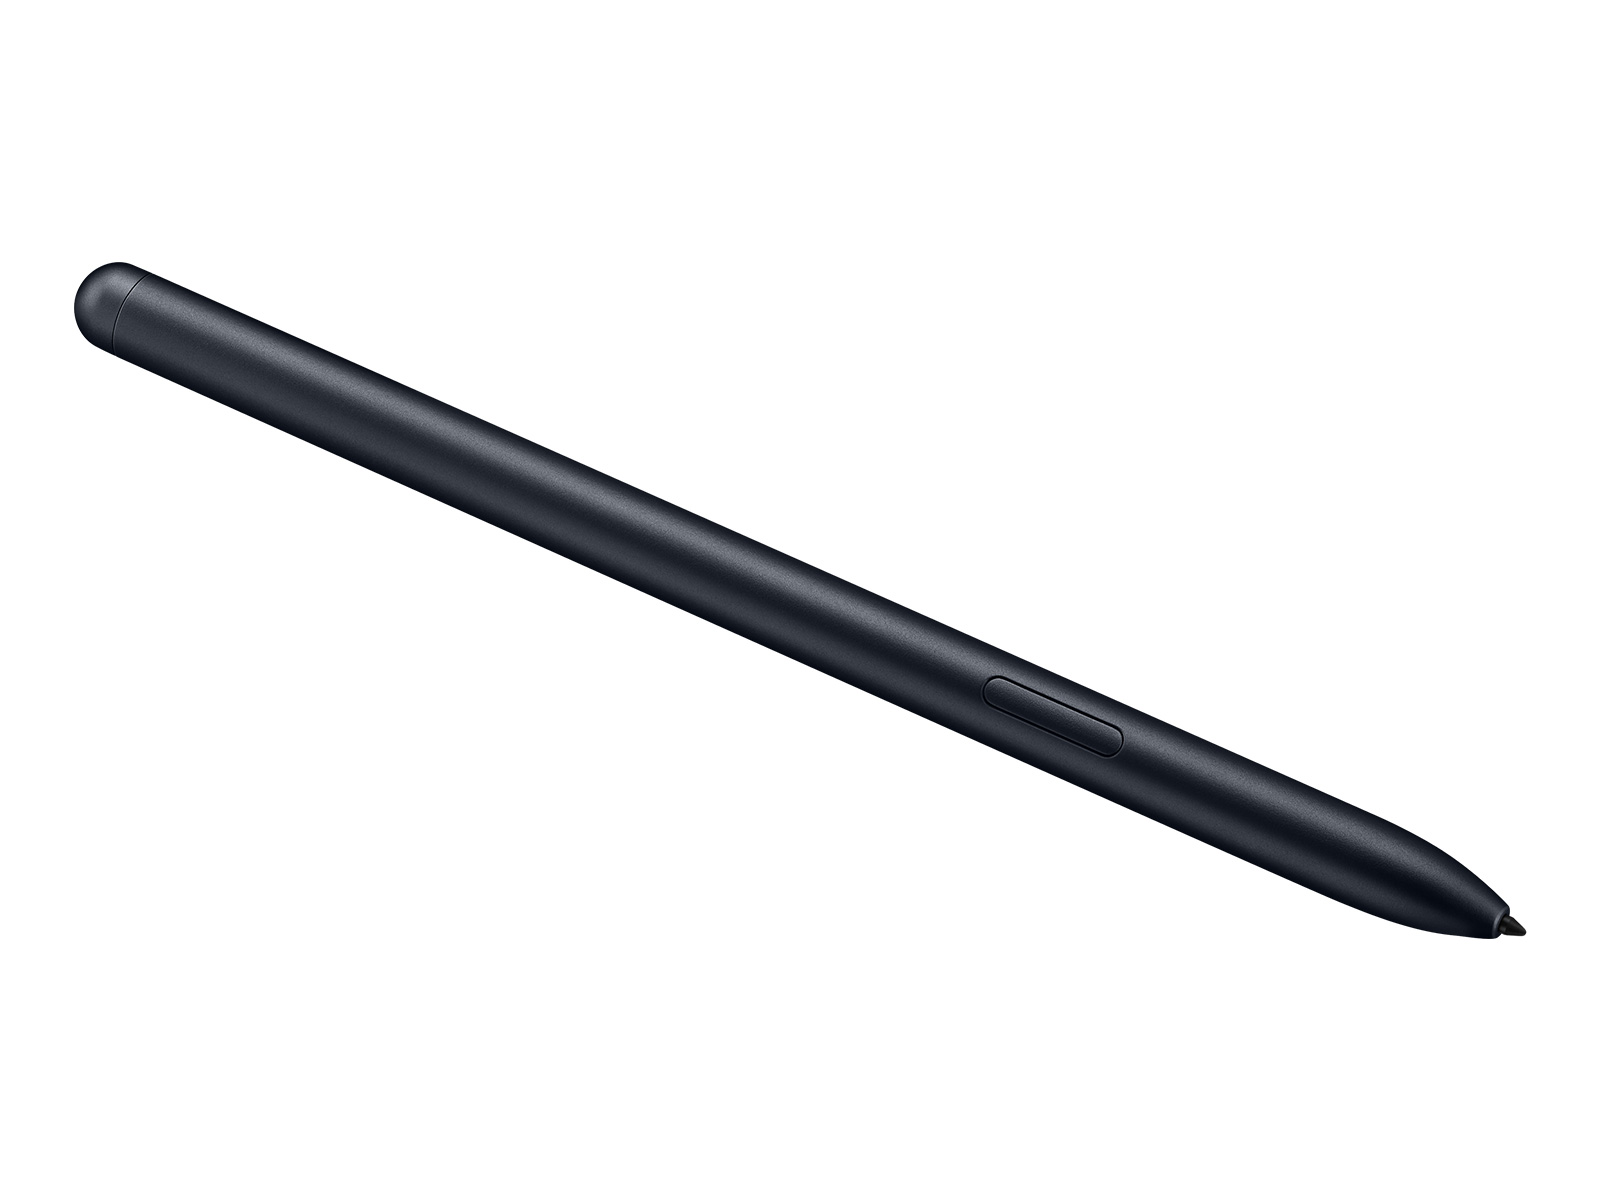 Samsung Ultra S Pen Galaxy Tab S8/s8+/s8 - Black